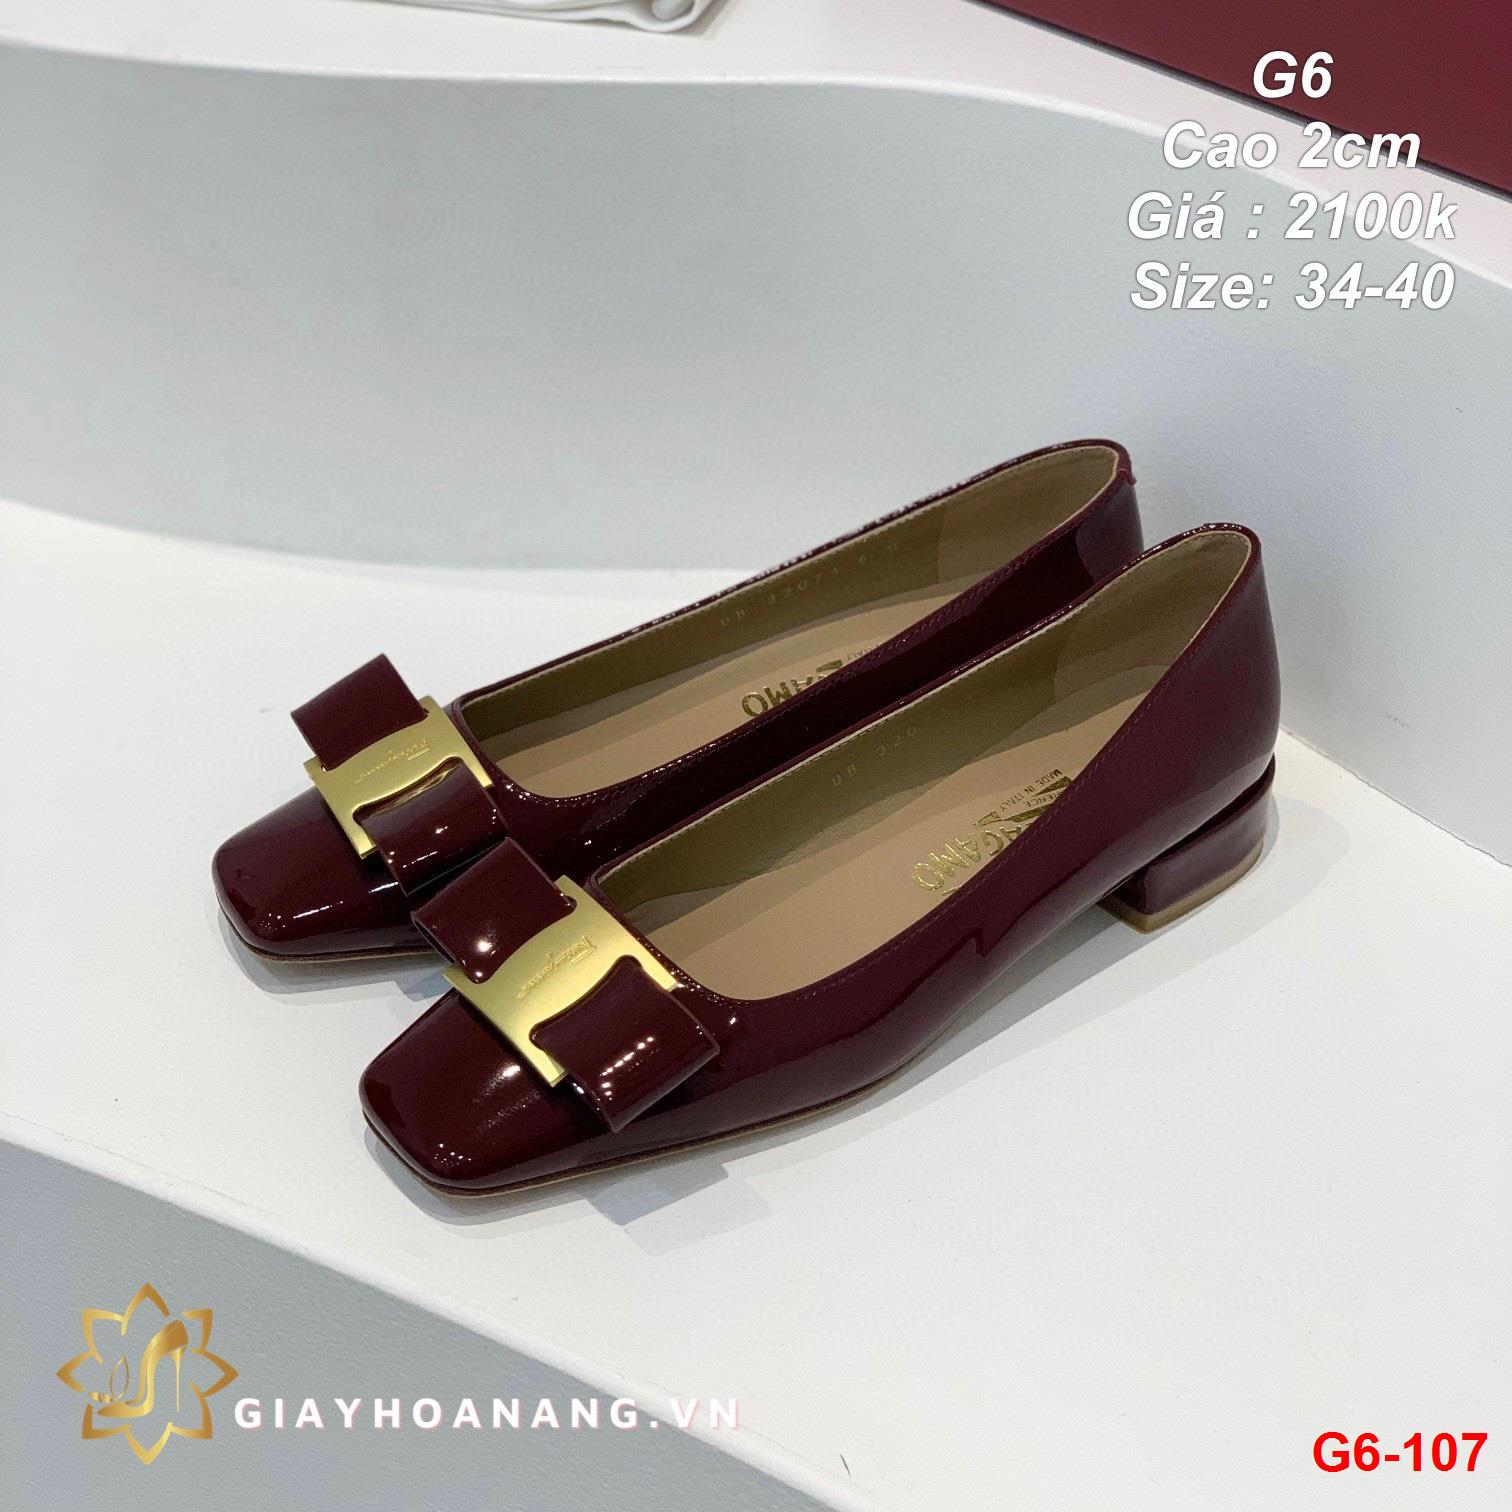 G6-107 Salvatore Ferragamo giày cao 2cm siêu cấp